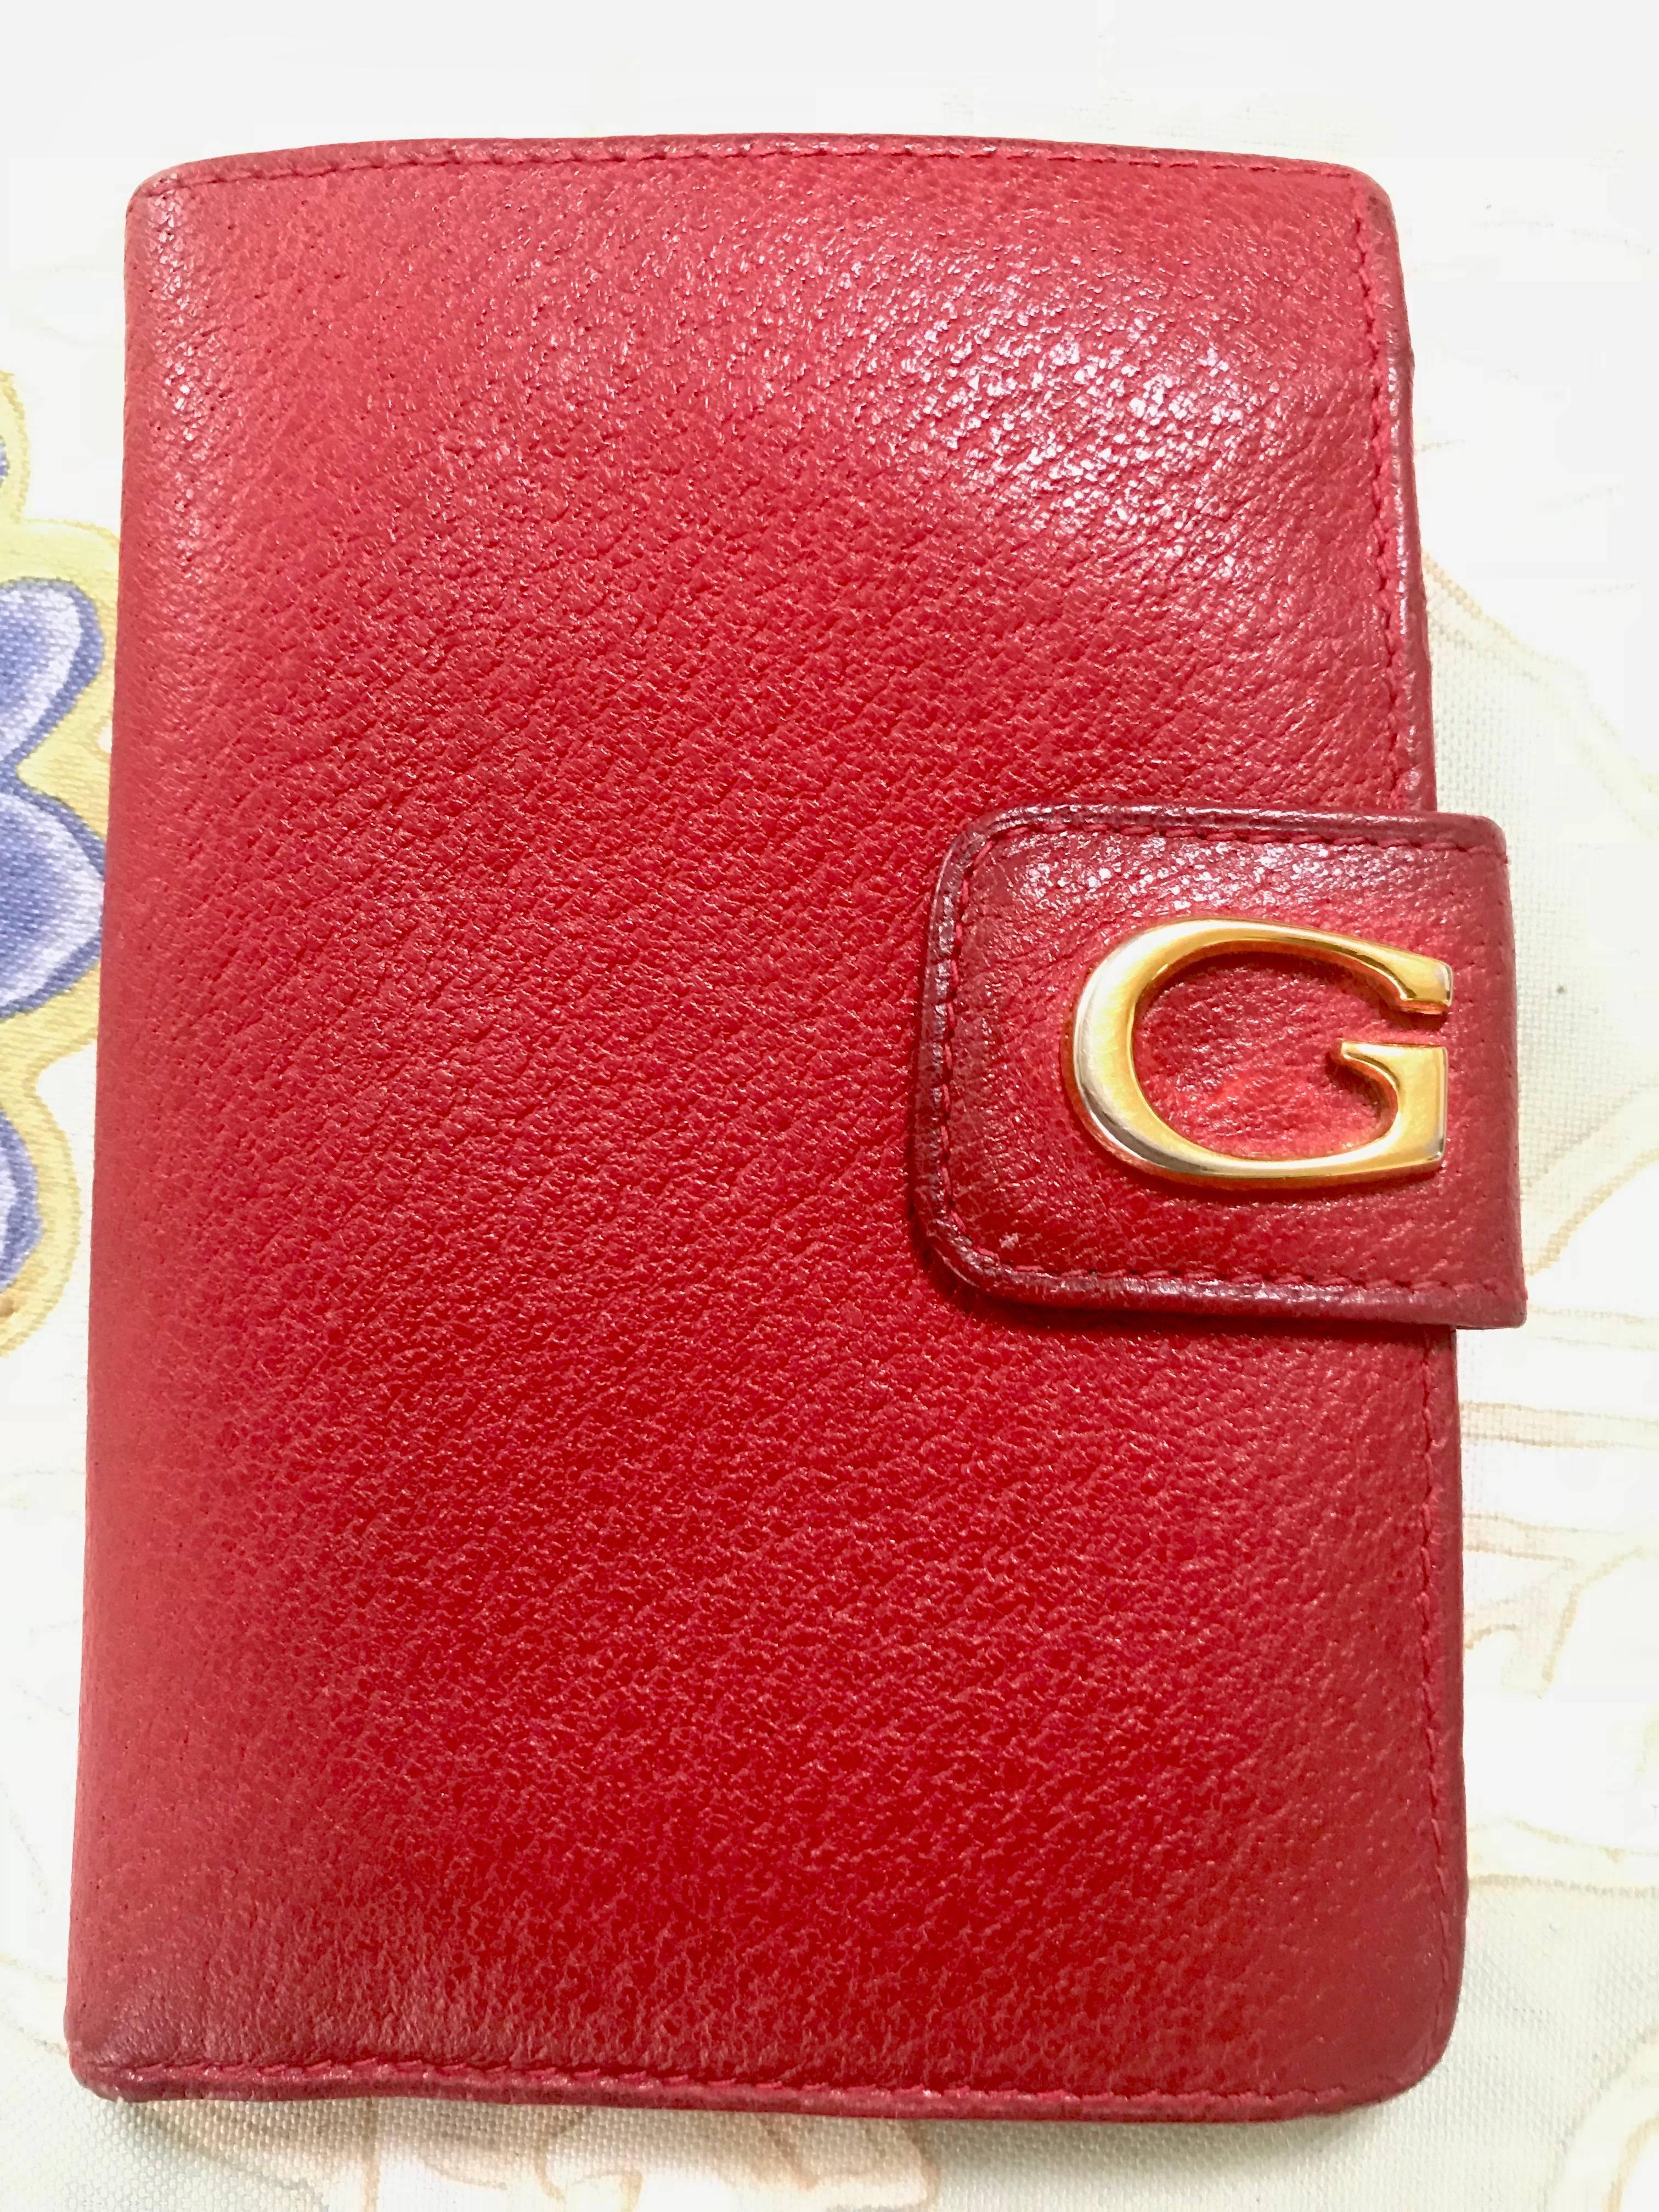 Vintage Gucci red pigskin leather wallet with golden G logo hardware closure.  For Sale 3